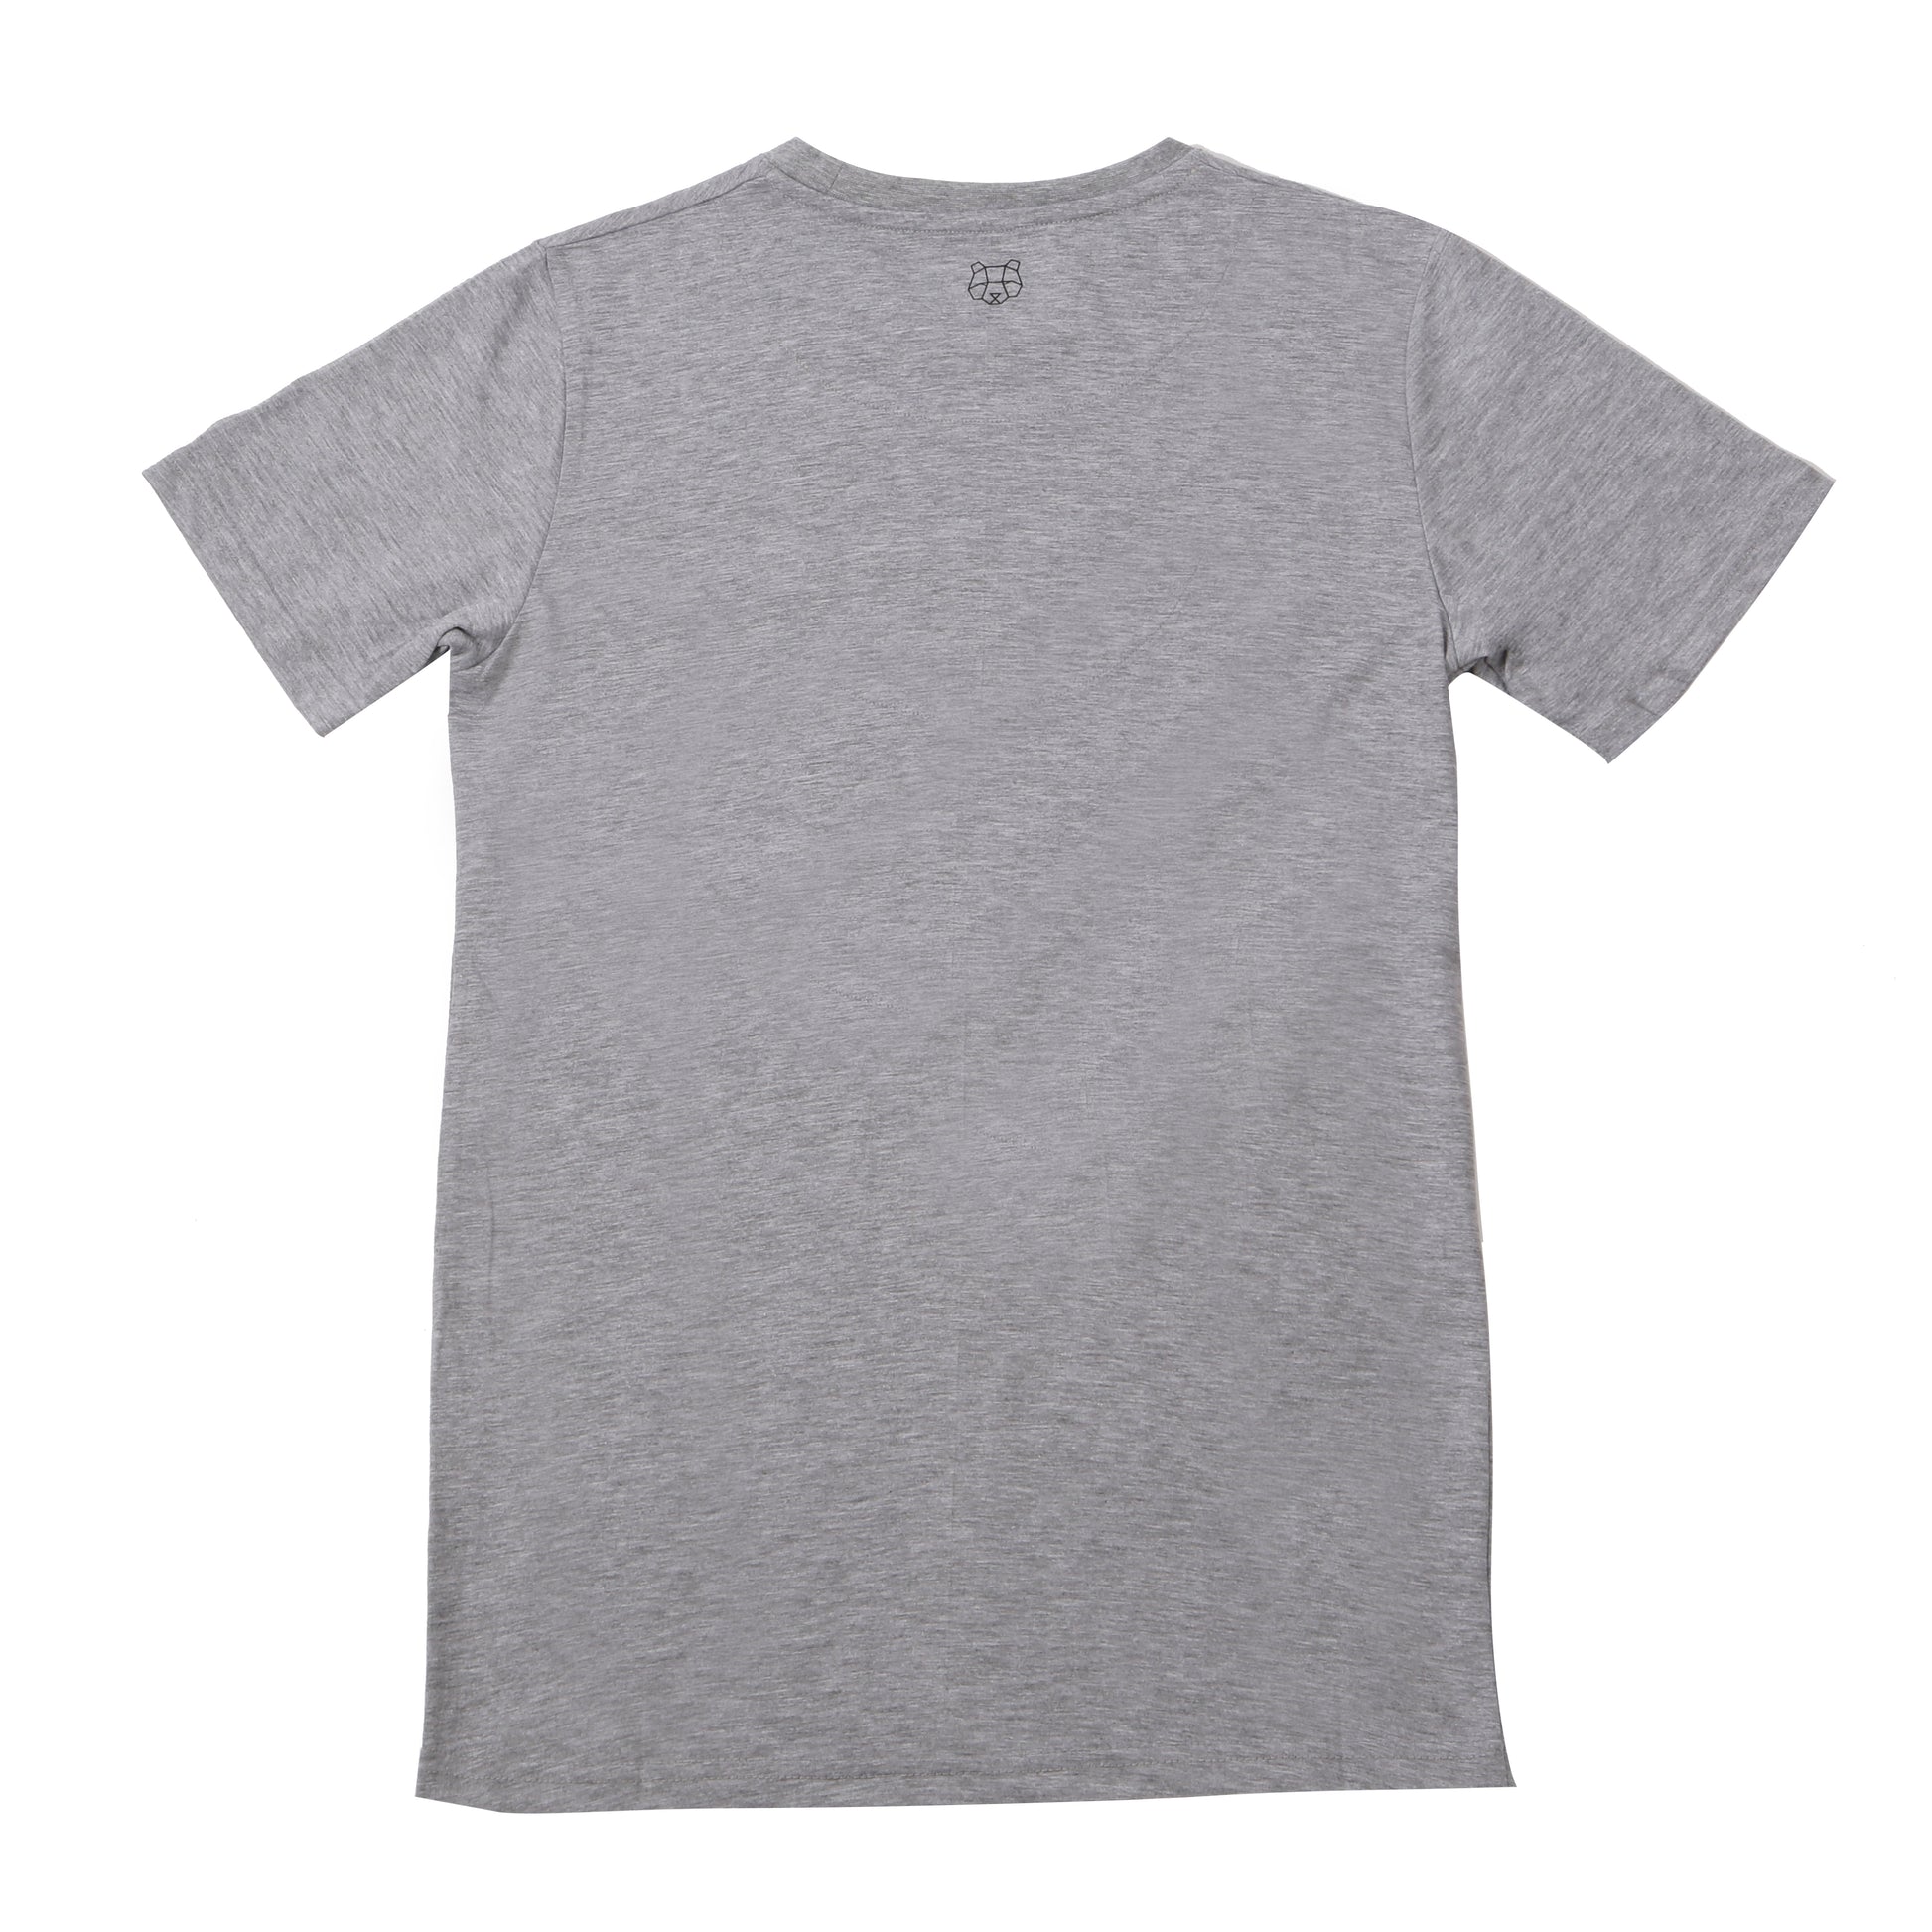 Premium menswear brand similar to flannels quality grey t-shirt 